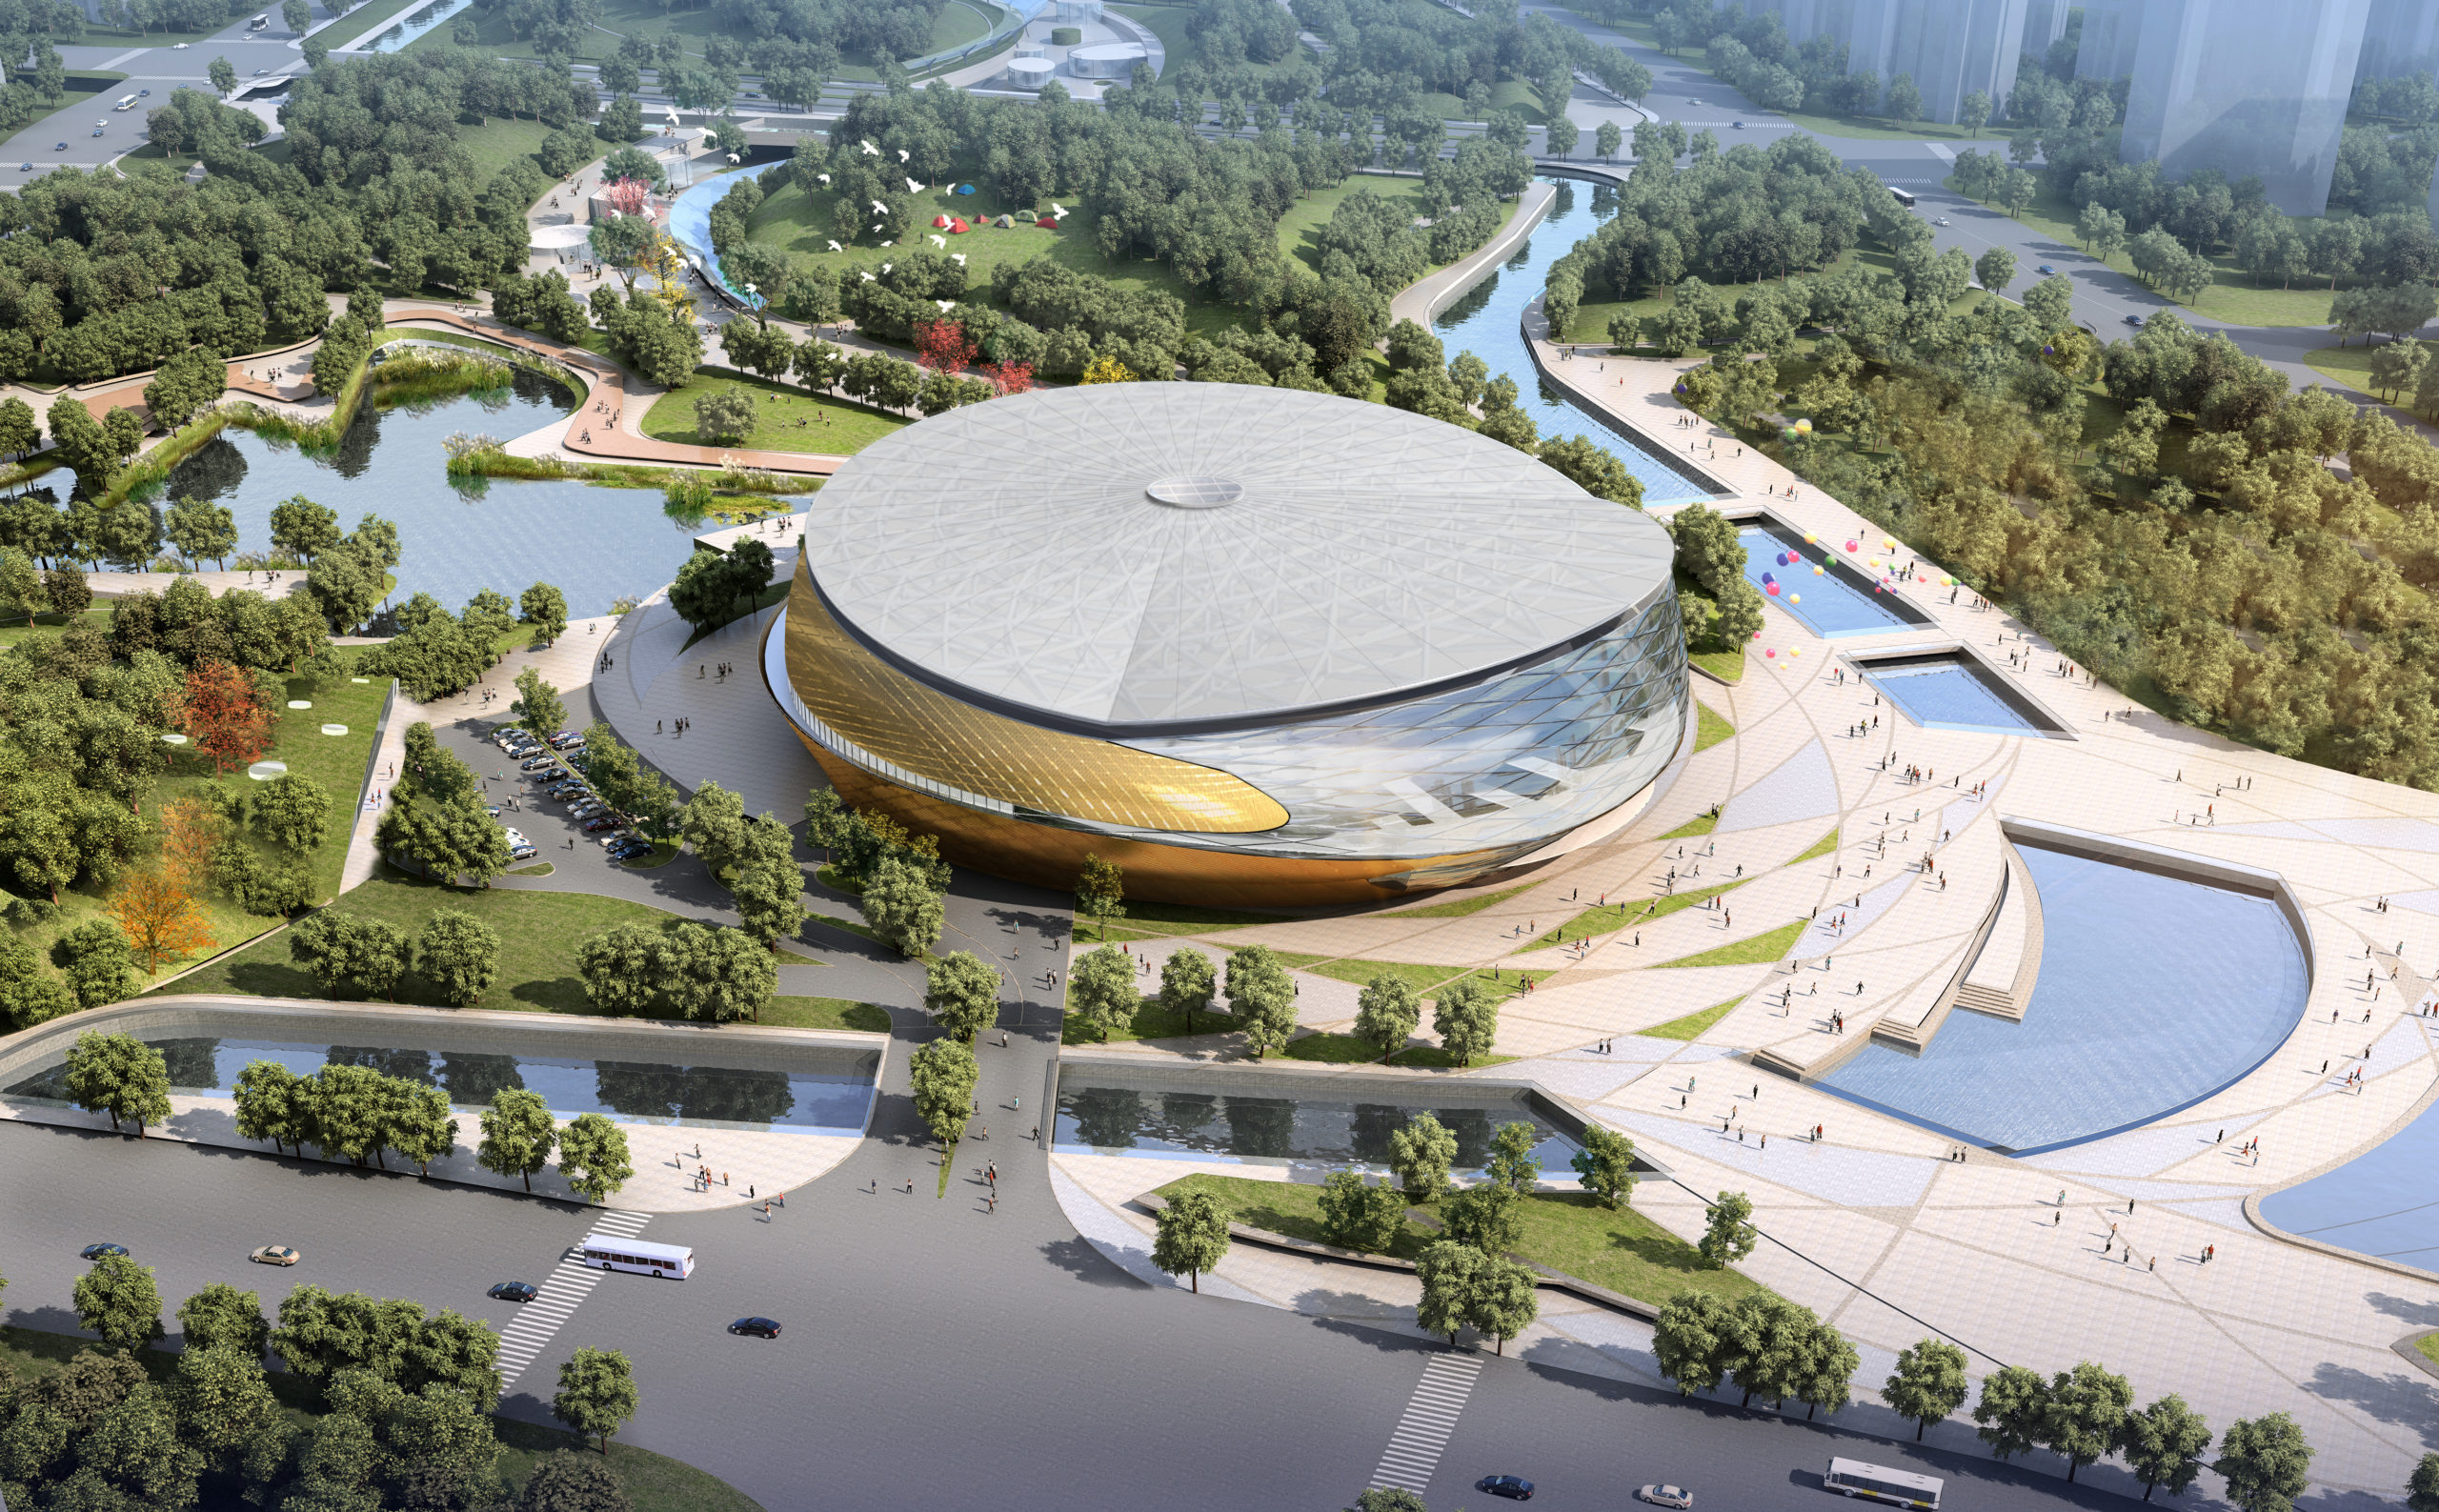 6 AwardWinning Stadiums That Take Sports Architecture to the Next Level